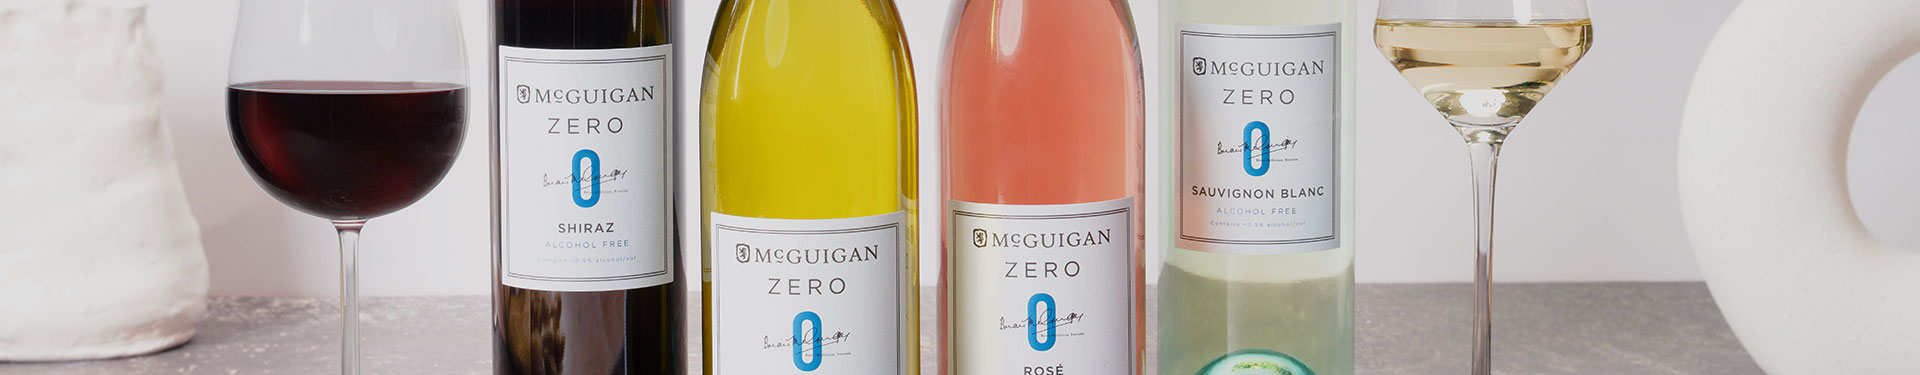 McGuigan Zero Shiraz, White, Rose and Sauvignon Blanc bottles